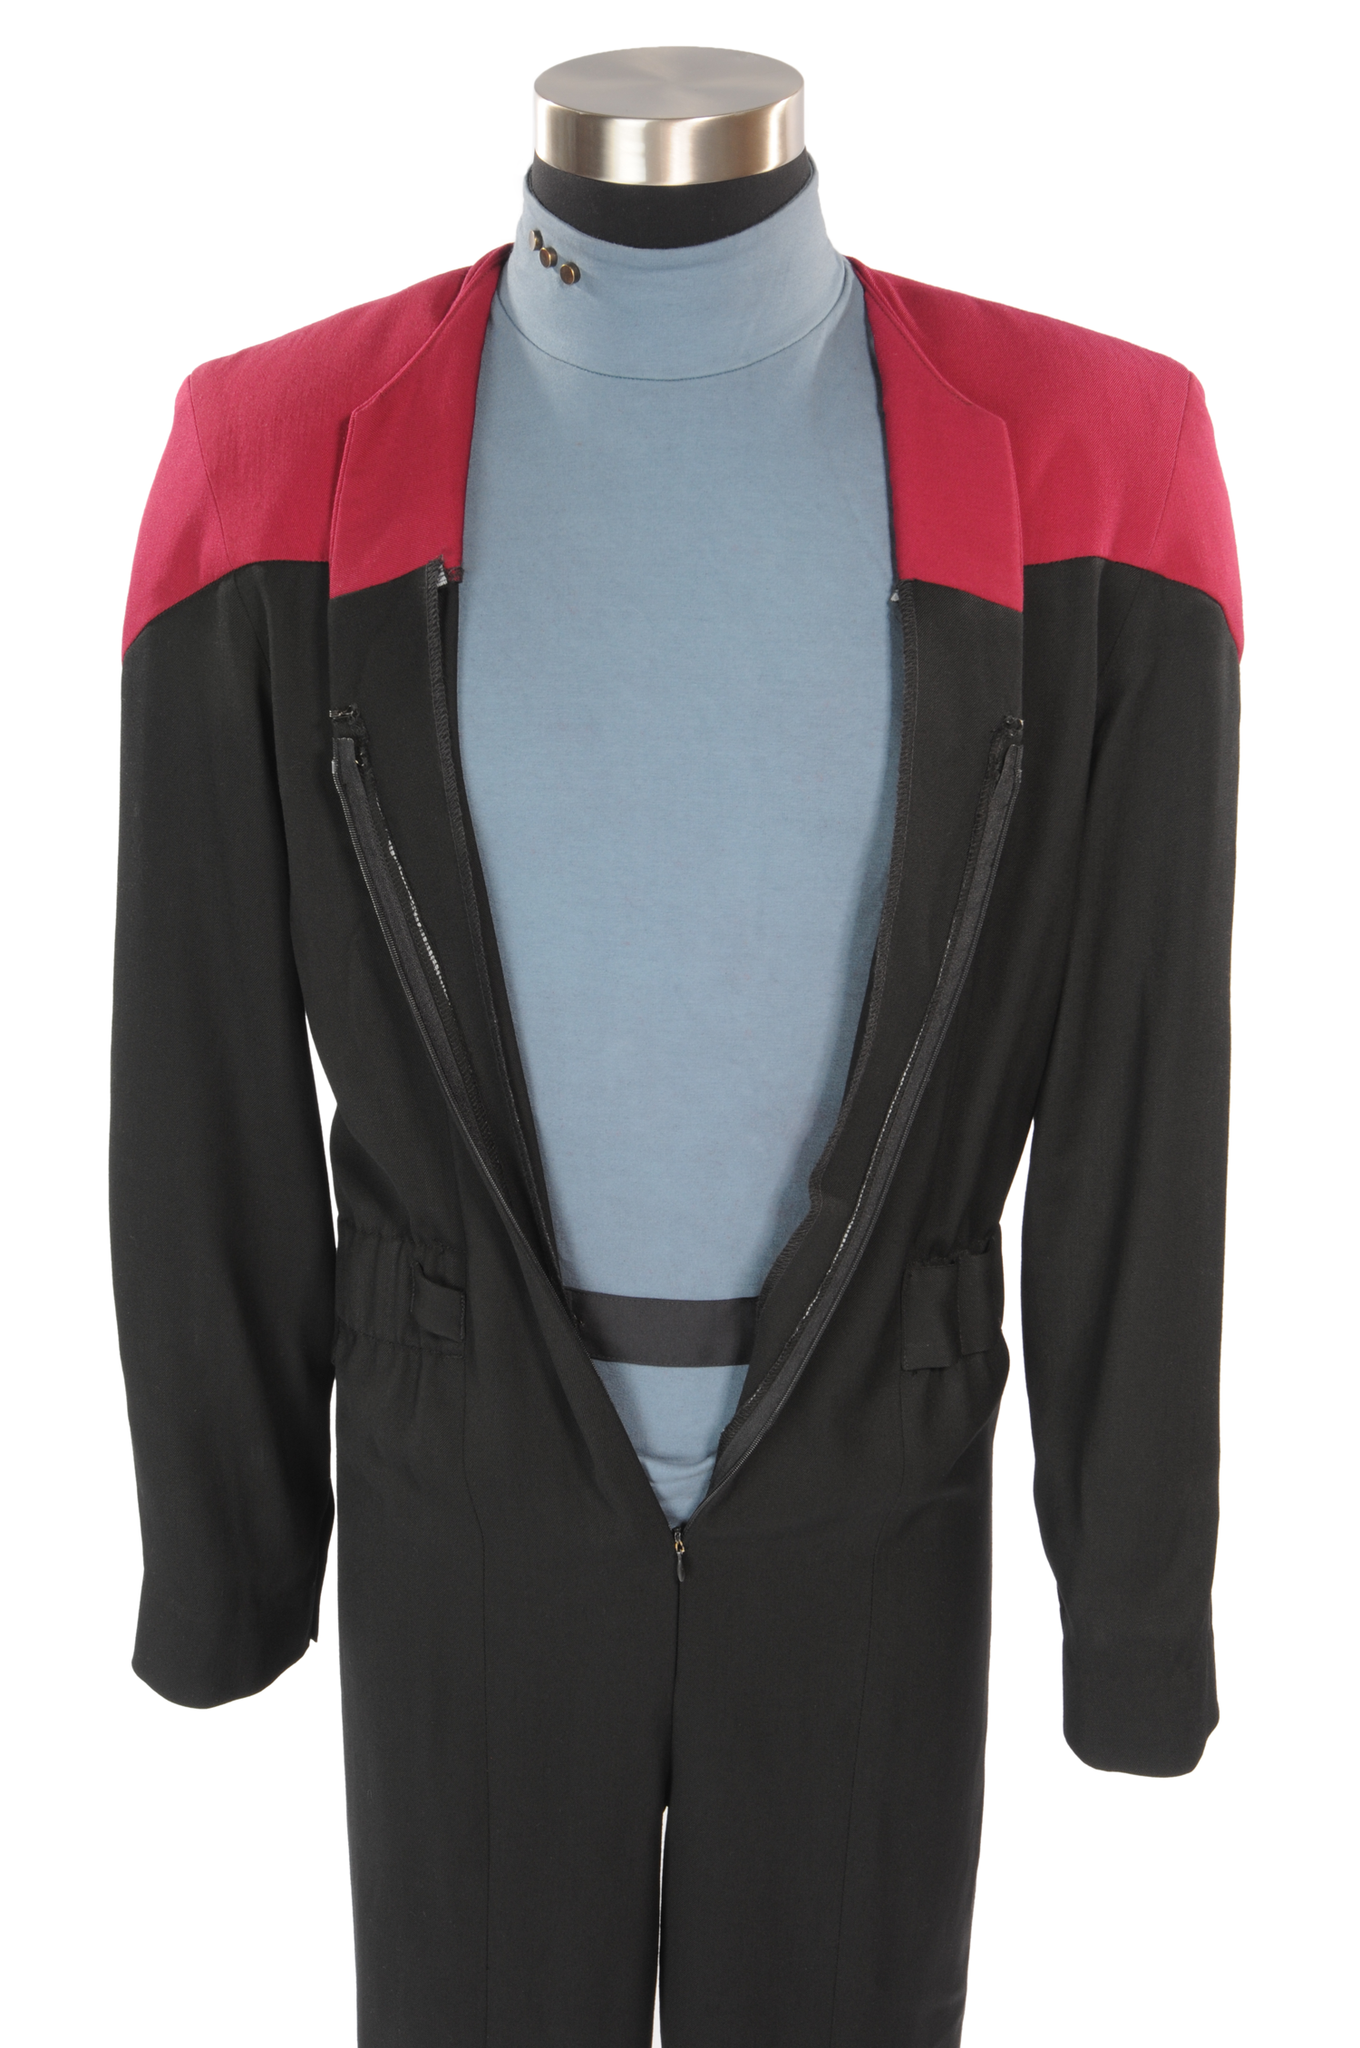 Star Trek Voyager Uniform 73